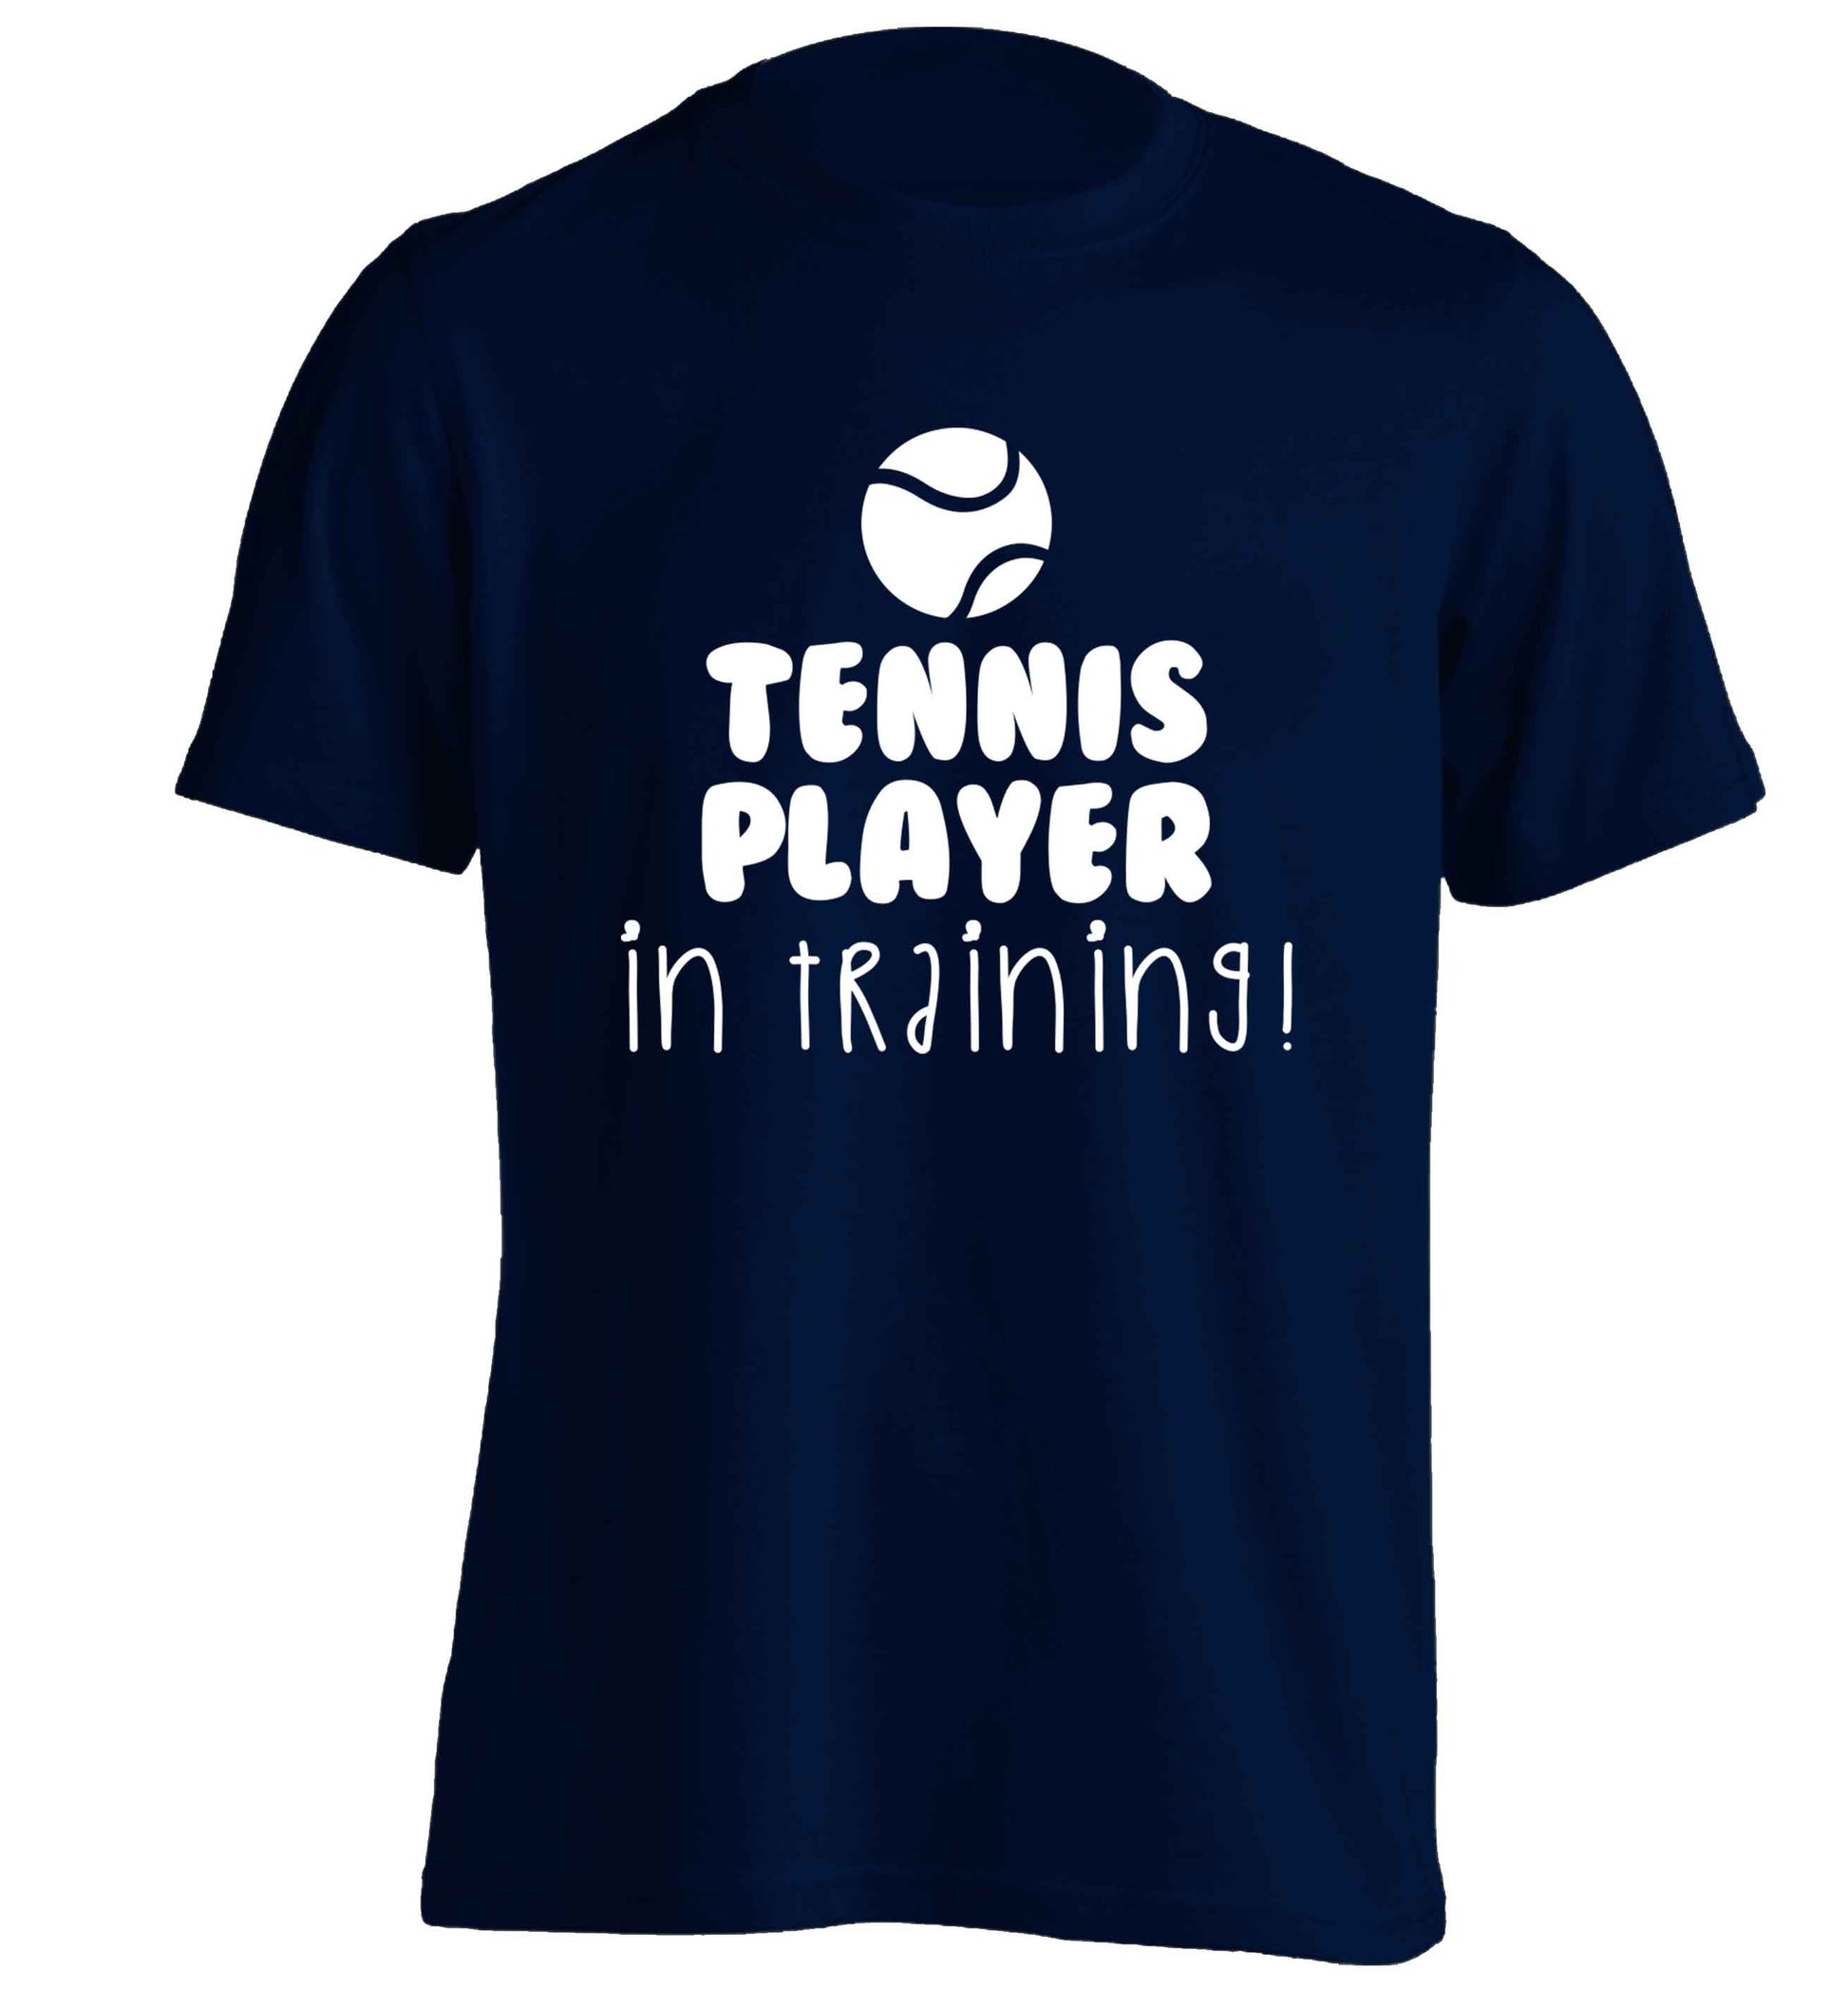 Tennis player in training adults unisex navy Tshirt 2XL